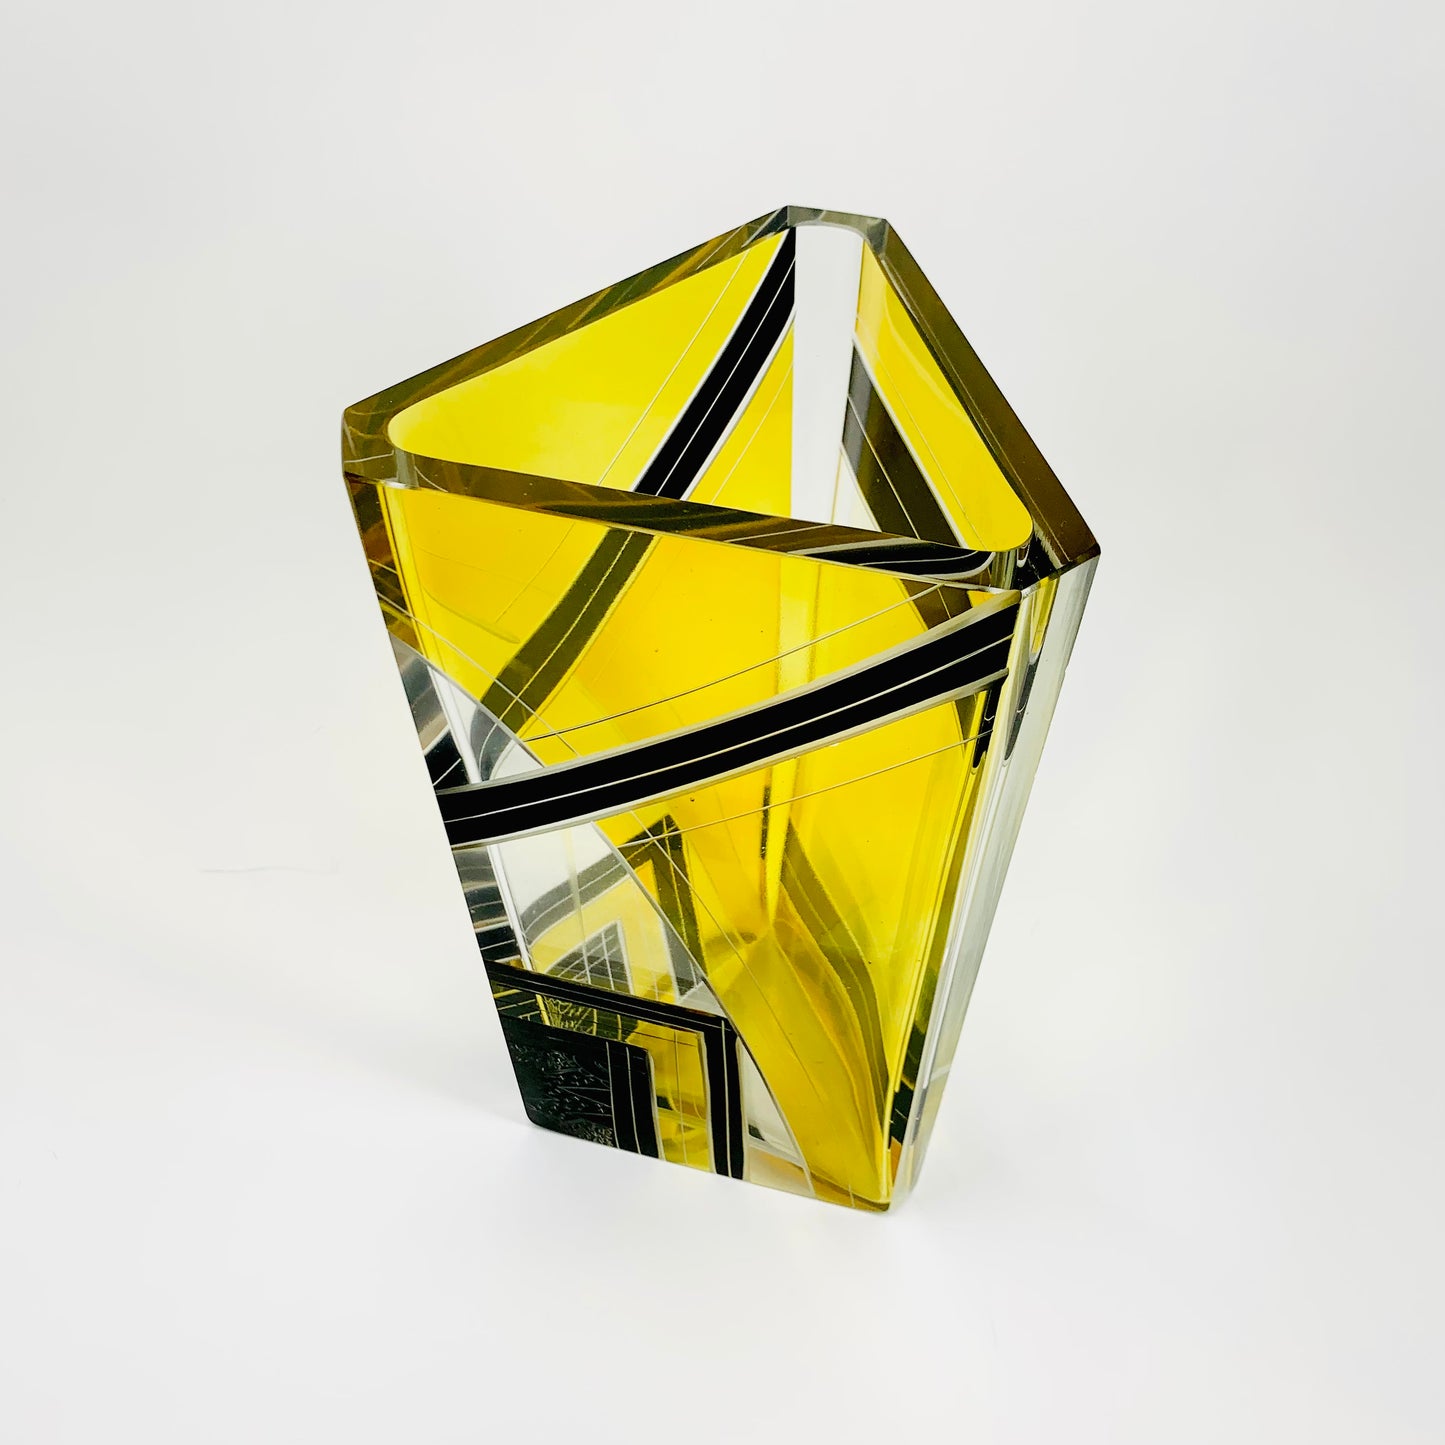 Antique Art Deco gold and black enamel triangular glass vase by Karl Palda